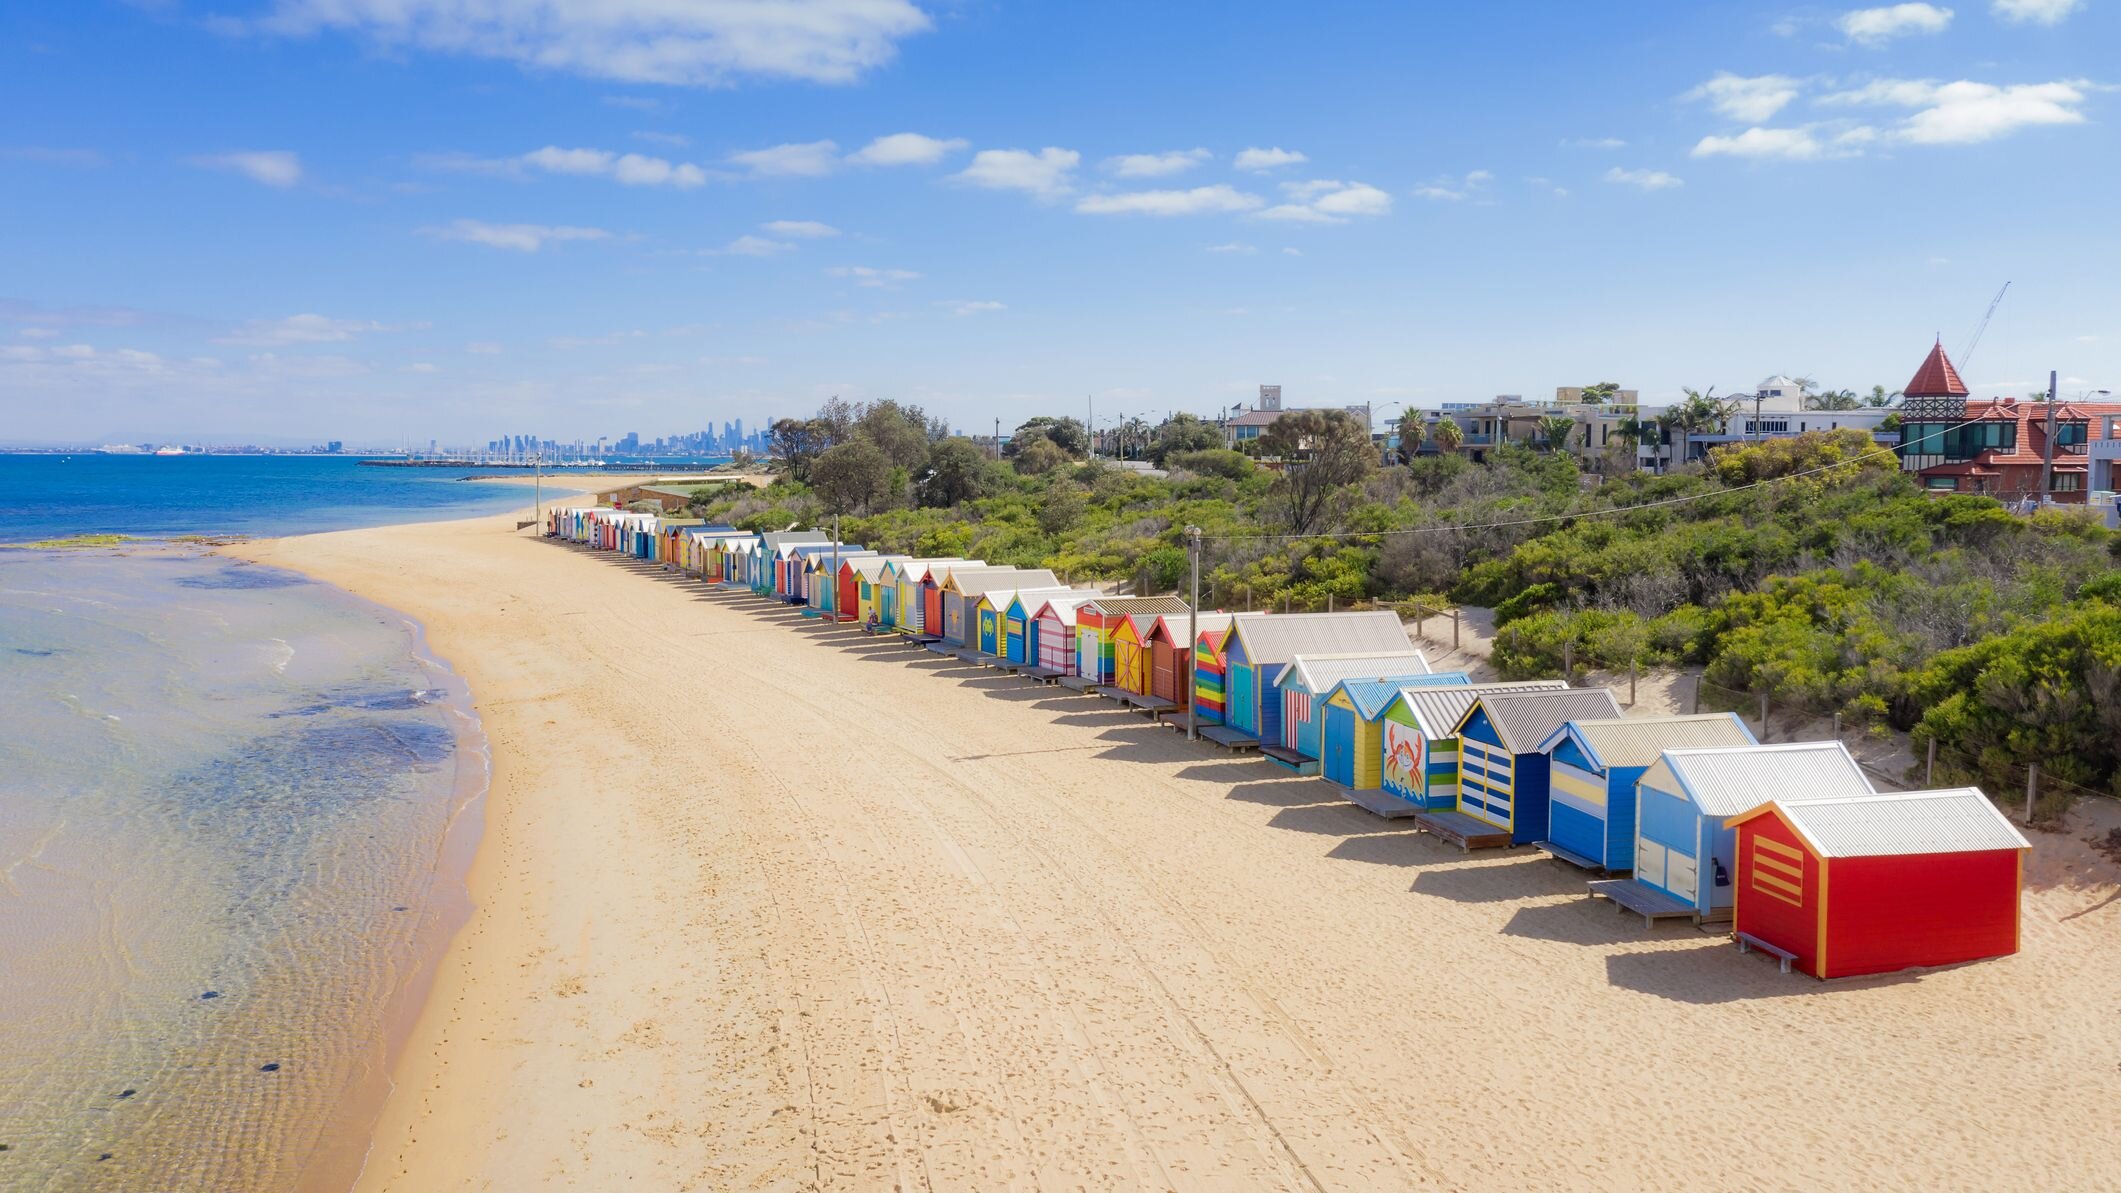 aerial-view-of-brighton-bathing-boxes-on-white-sandy-beach-at-brighton-beach-in-melbourne--victoria--australia--1134480493-4ebbe192a17144cfa8f82eac988da916.jpg